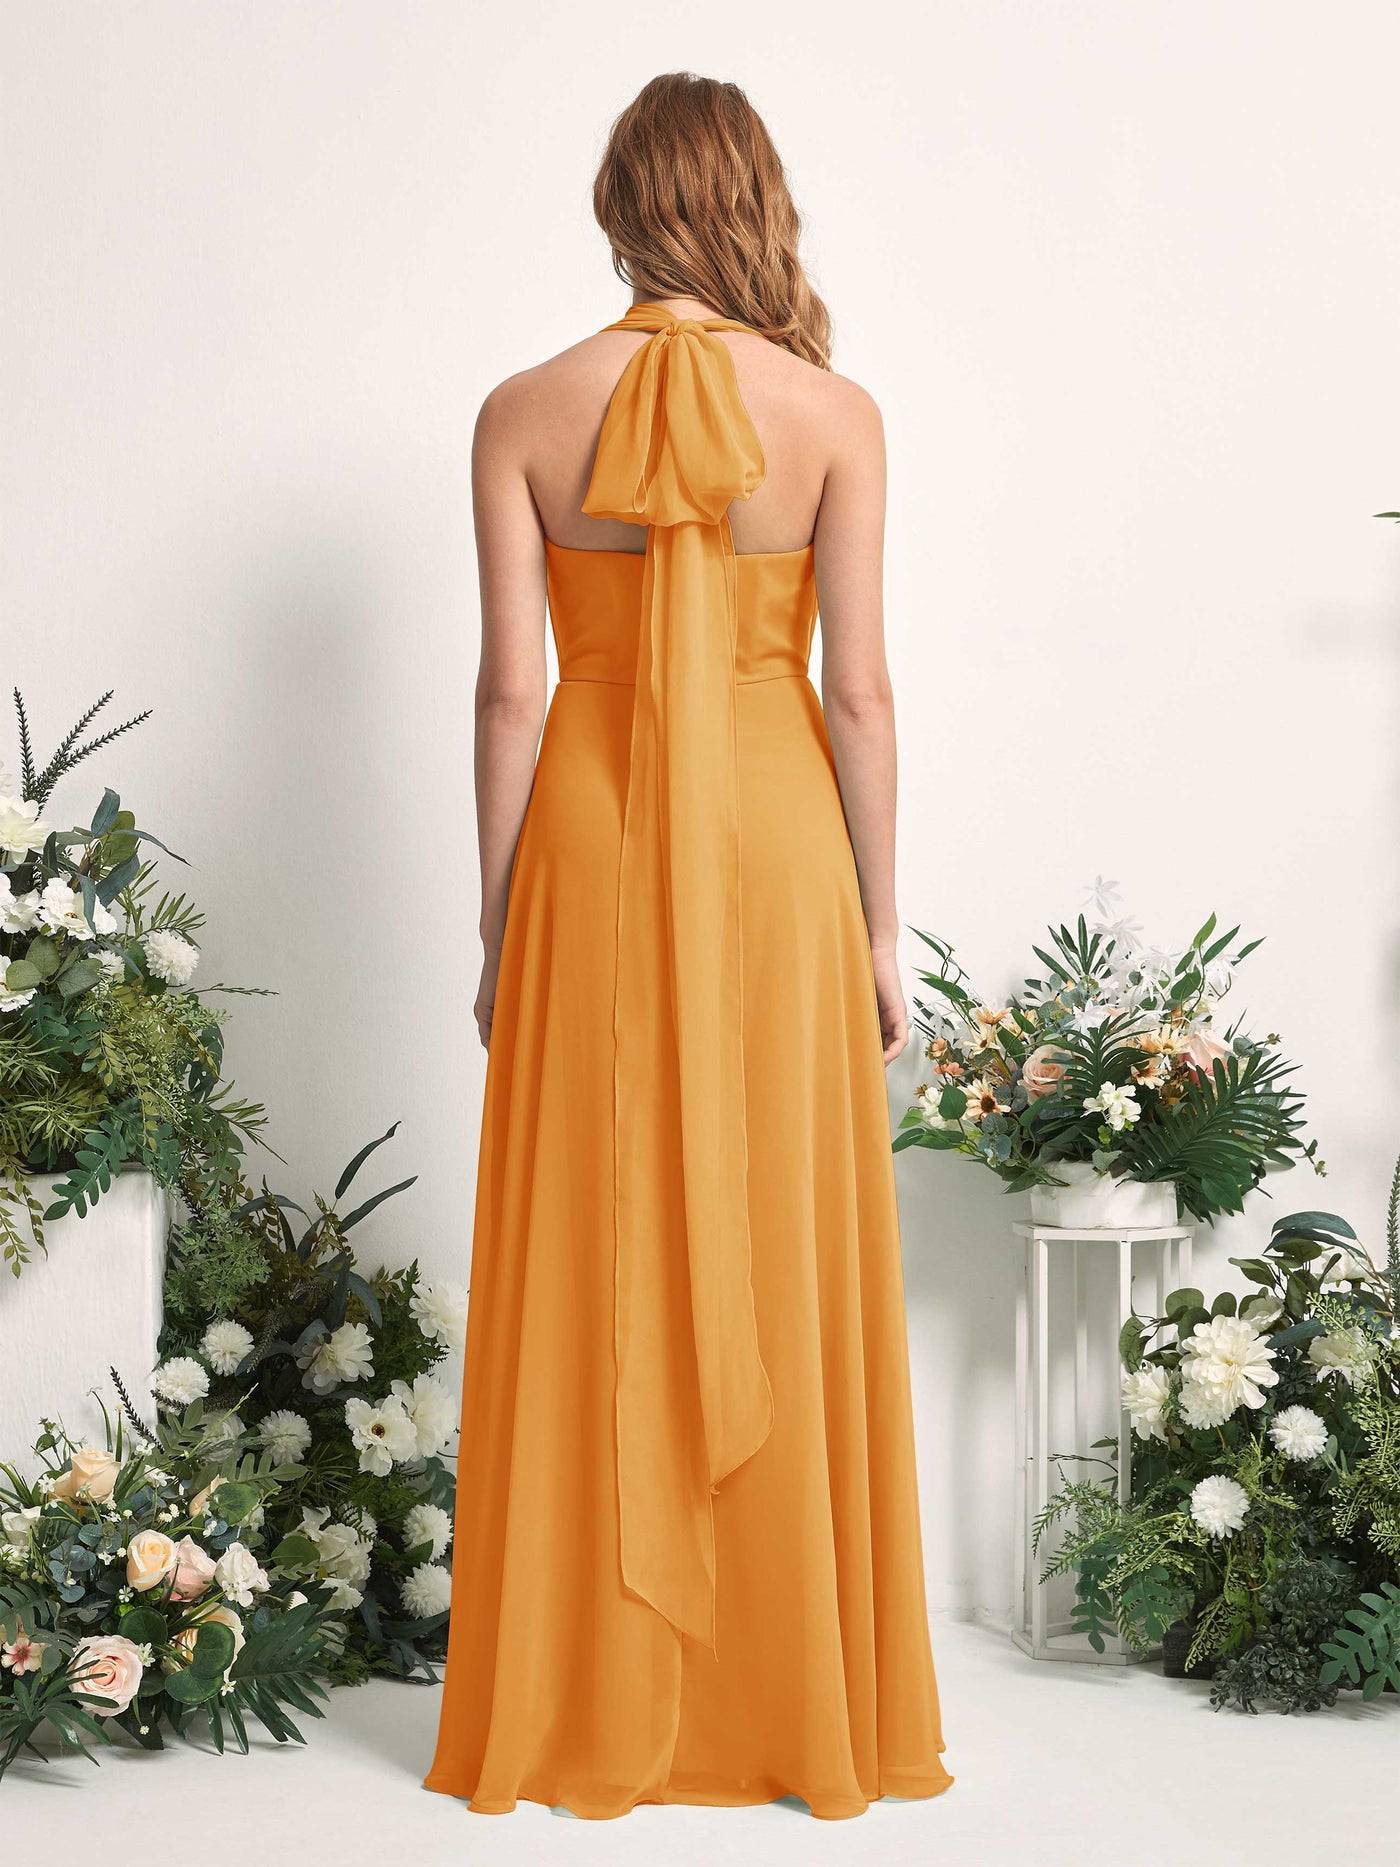 Mango Bridesmaid Dresses Bridesmaid Dress A-line Chiffon Halter Full Length Short Sleeves Wedding Party Dress (81226302)#color_mango